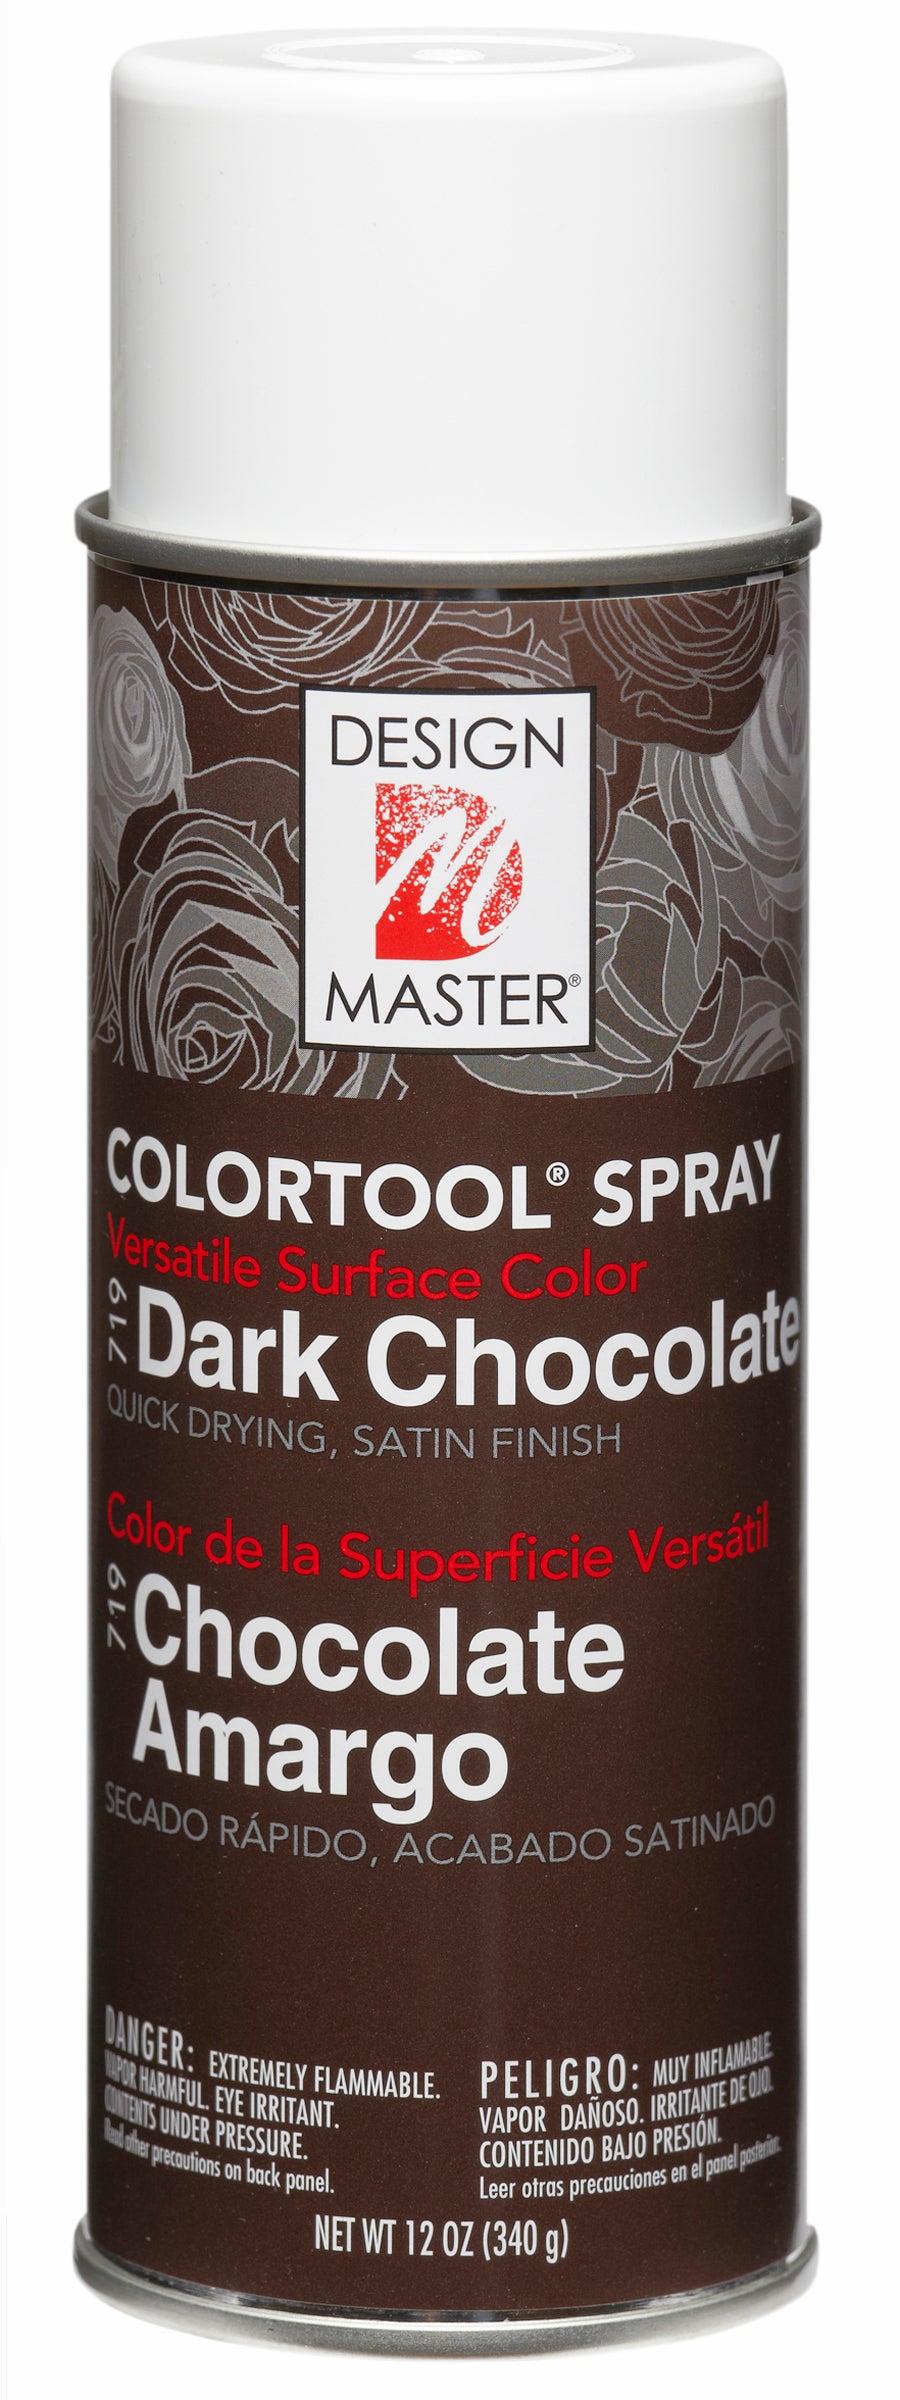 Design Master Colortool Spray-Dark Chocolate